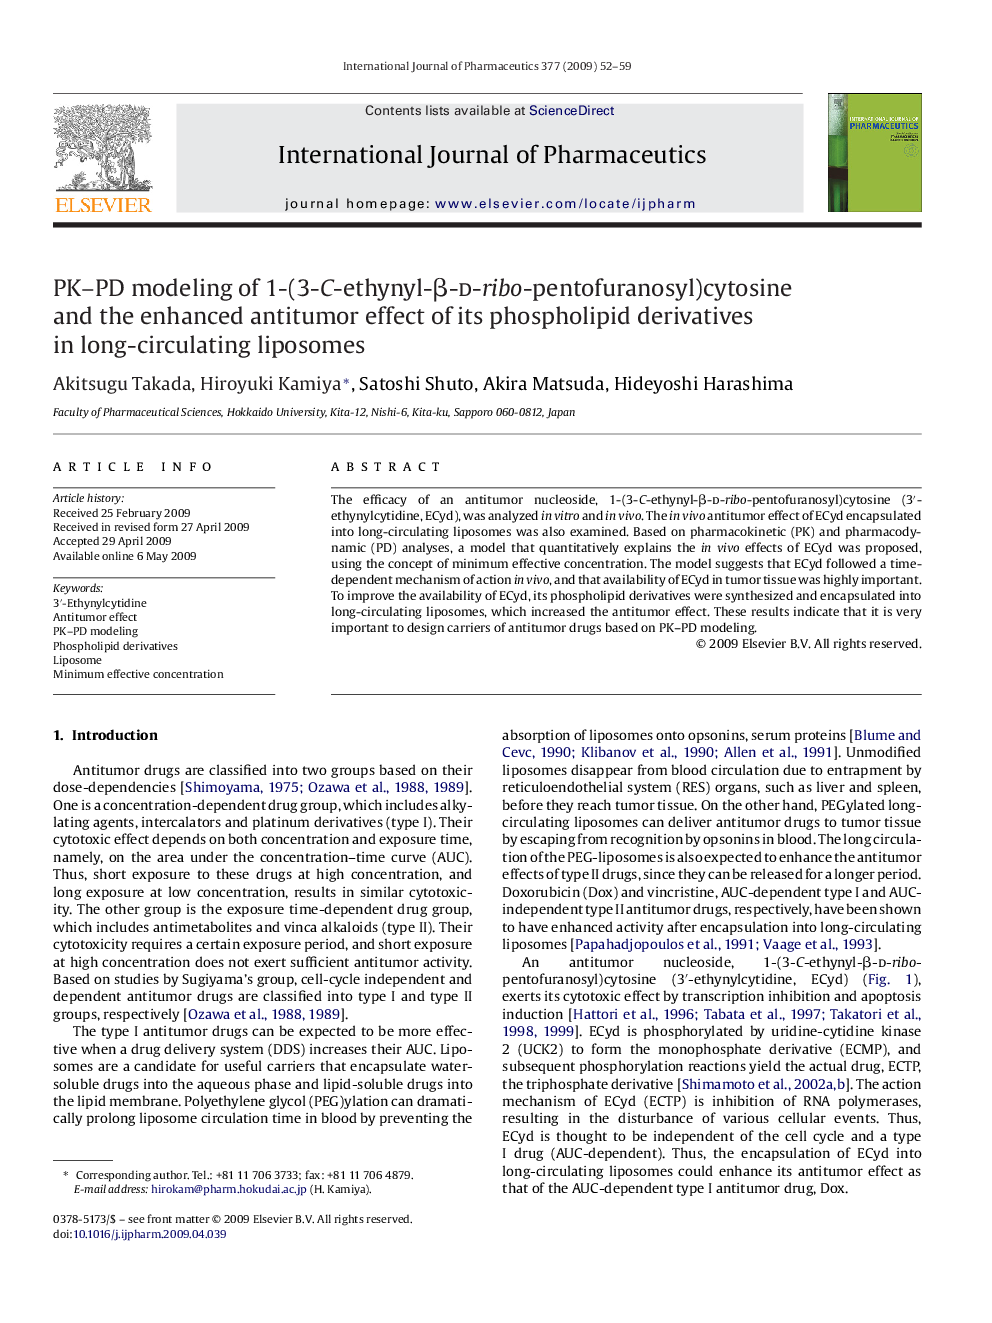 PK–PD modeling of 1-(3-C-ethynyl-β-d-ribo-pentofuranosyl)cytosine and the enhanced antitumor effect of its phospholipid derivatives in long-circulating liposomes